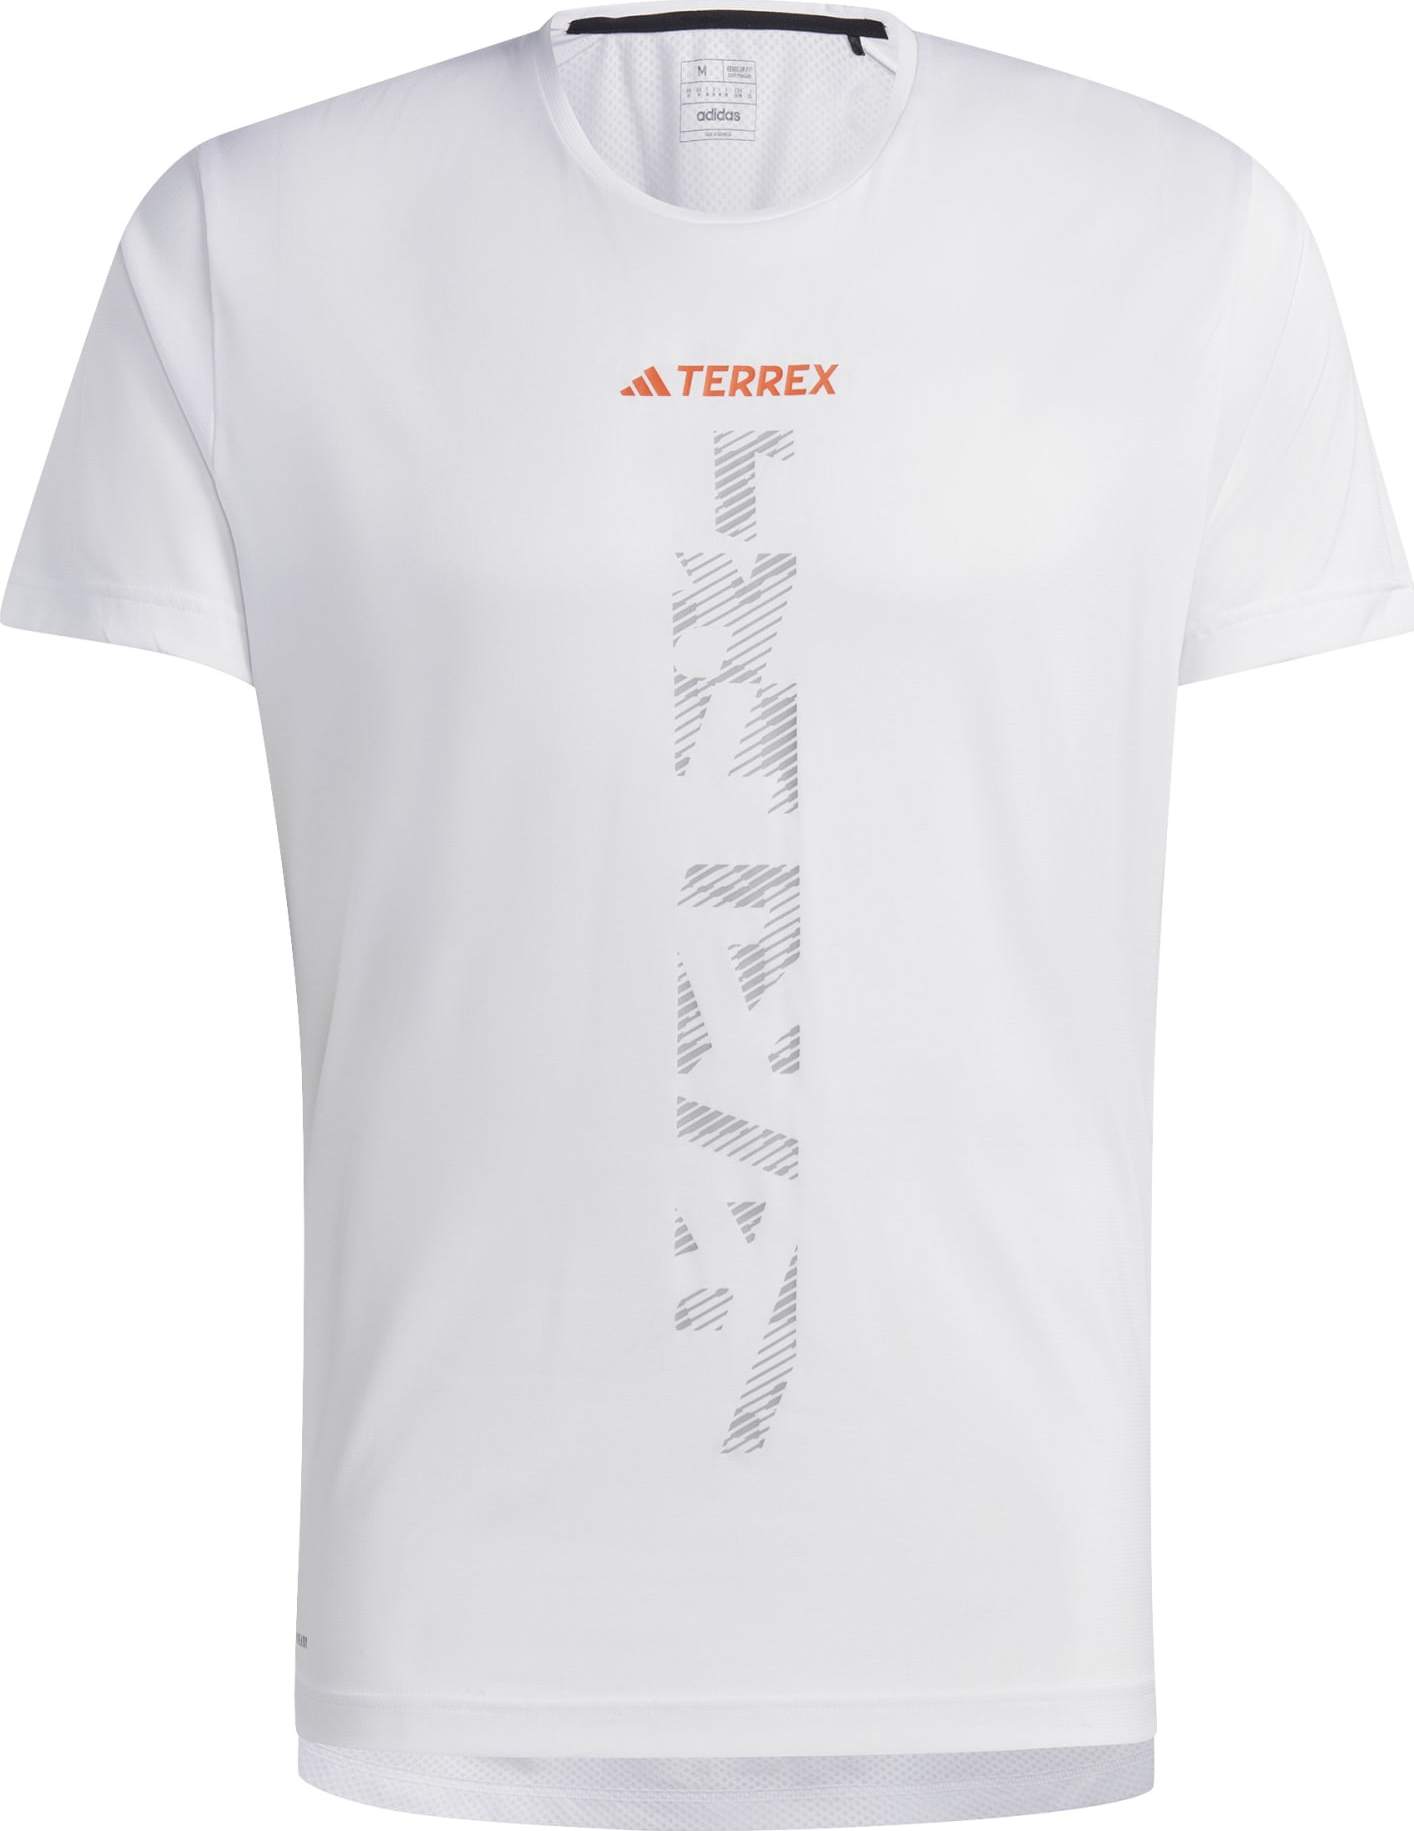 Adidas Men’s Terrex Agravic Trail Running T-Shirt White